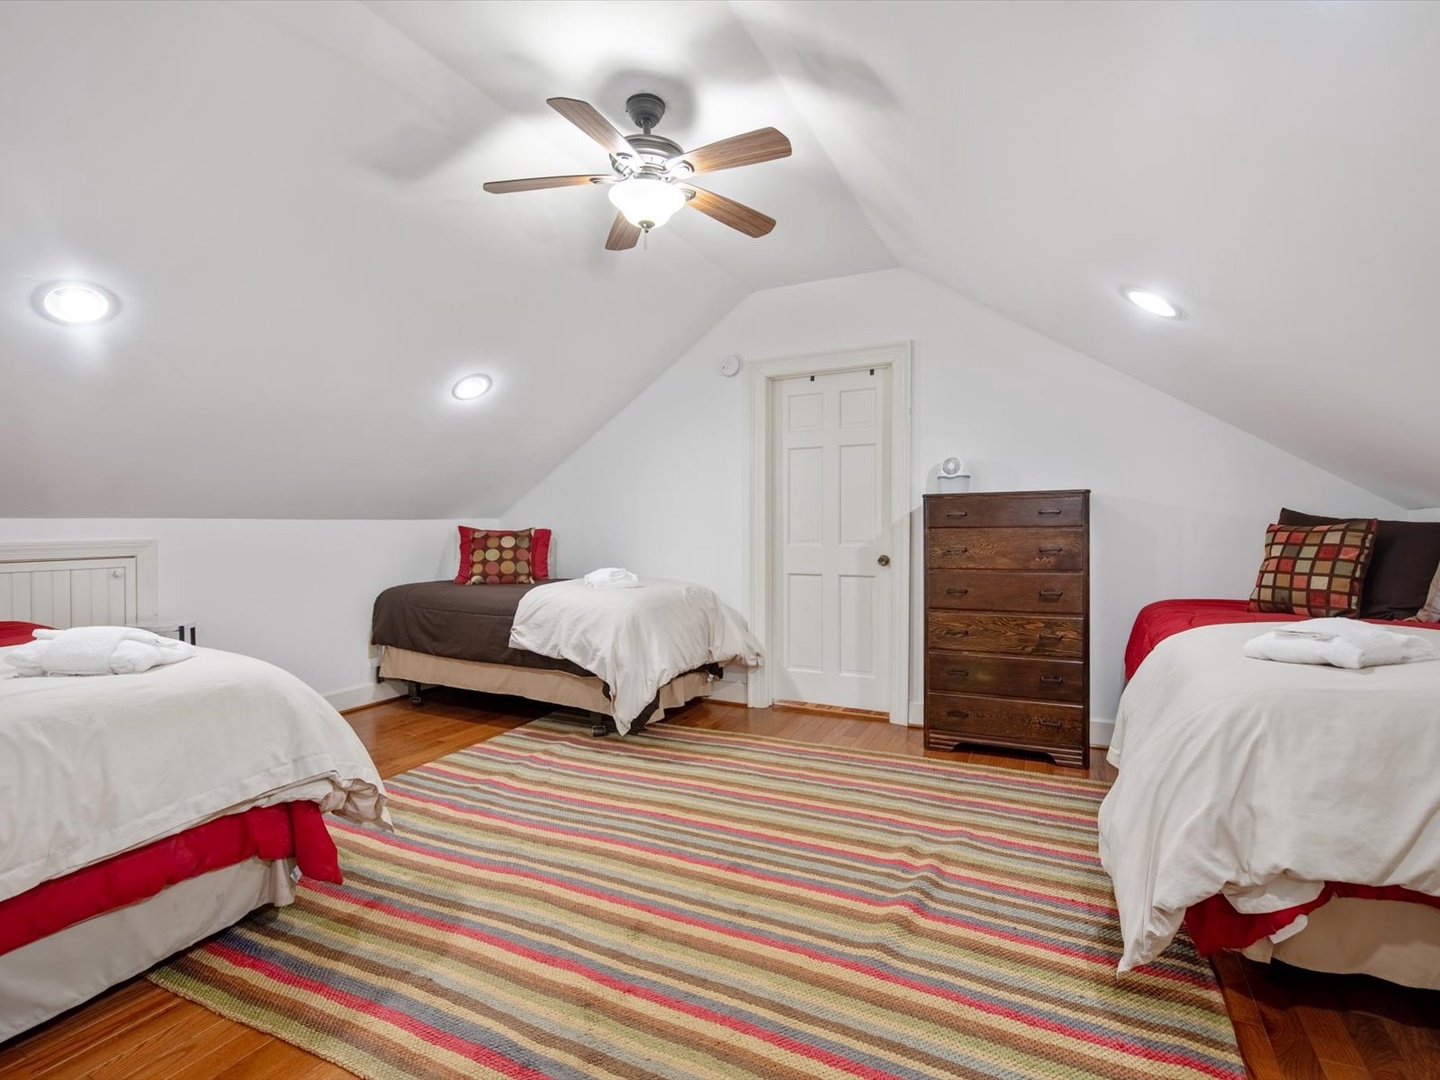 Gleesome Inn- Guest house shared bedroom area